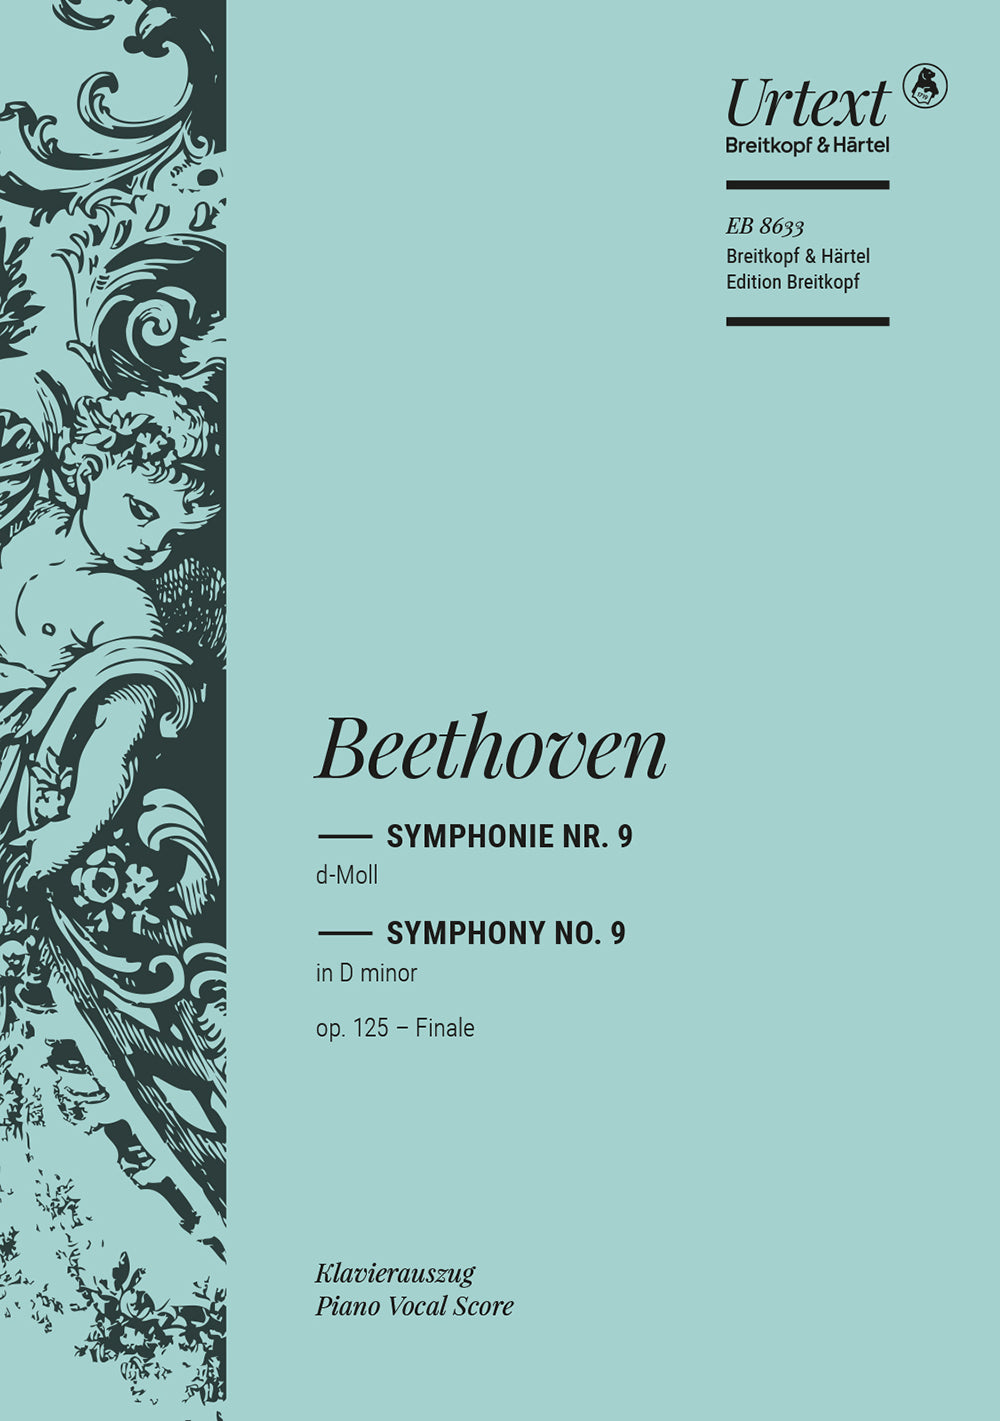 Beethoven Symphony No 9 in D minor Opus 125